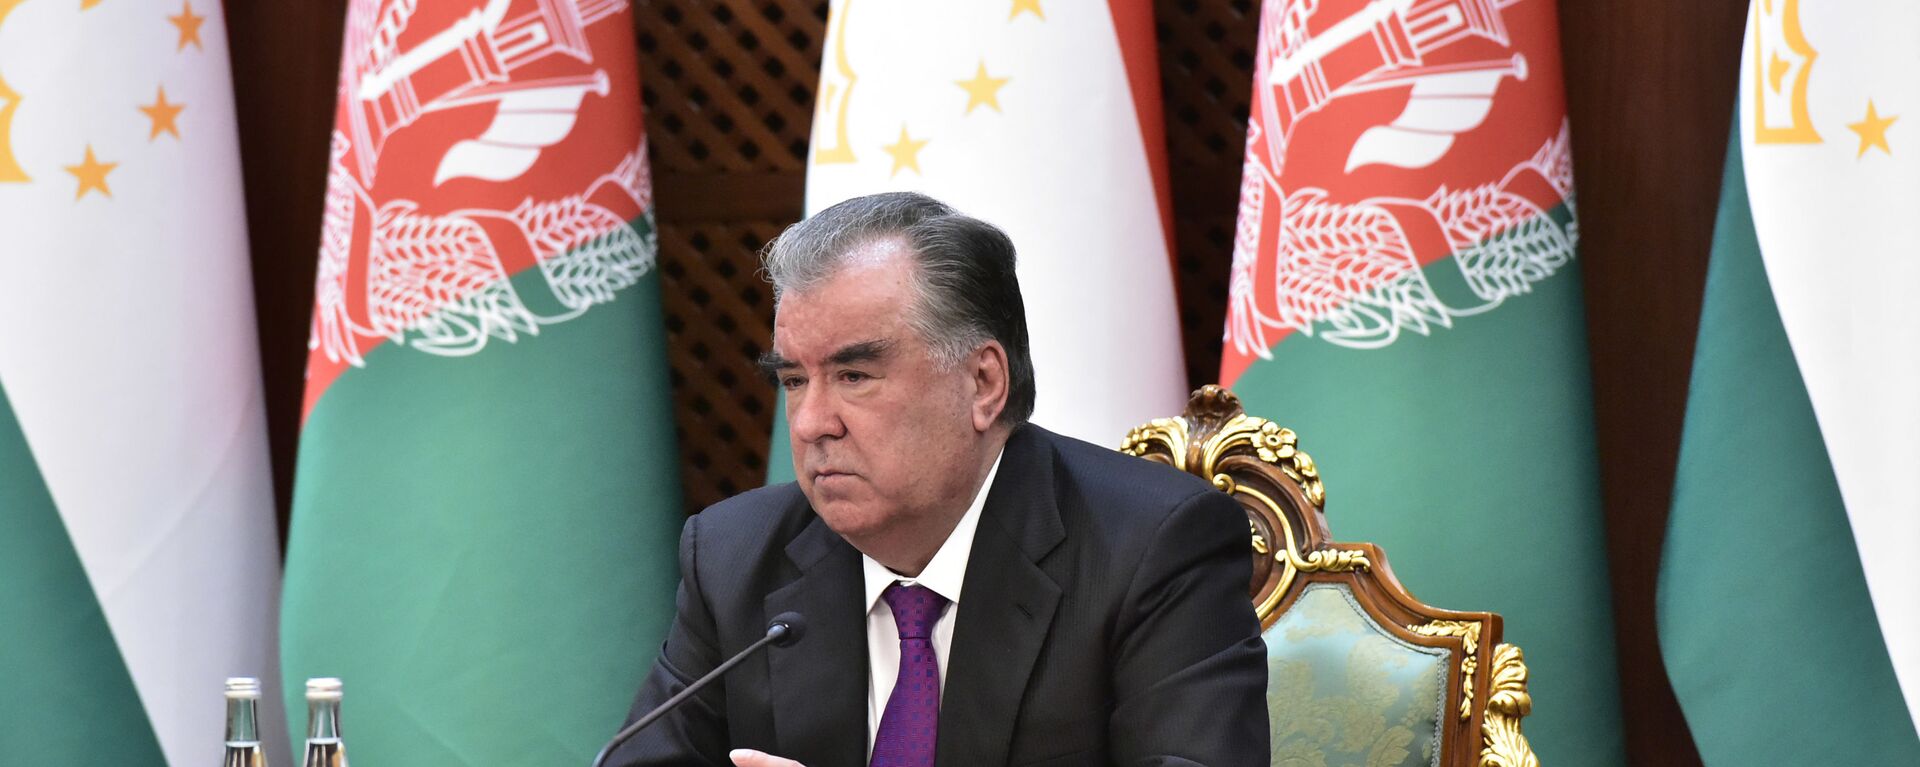 Официальная встреча президента Афганистана Ашрафа Гани в Душанбе  - Sputnik Таджикистан, 1920, 30.03.2021